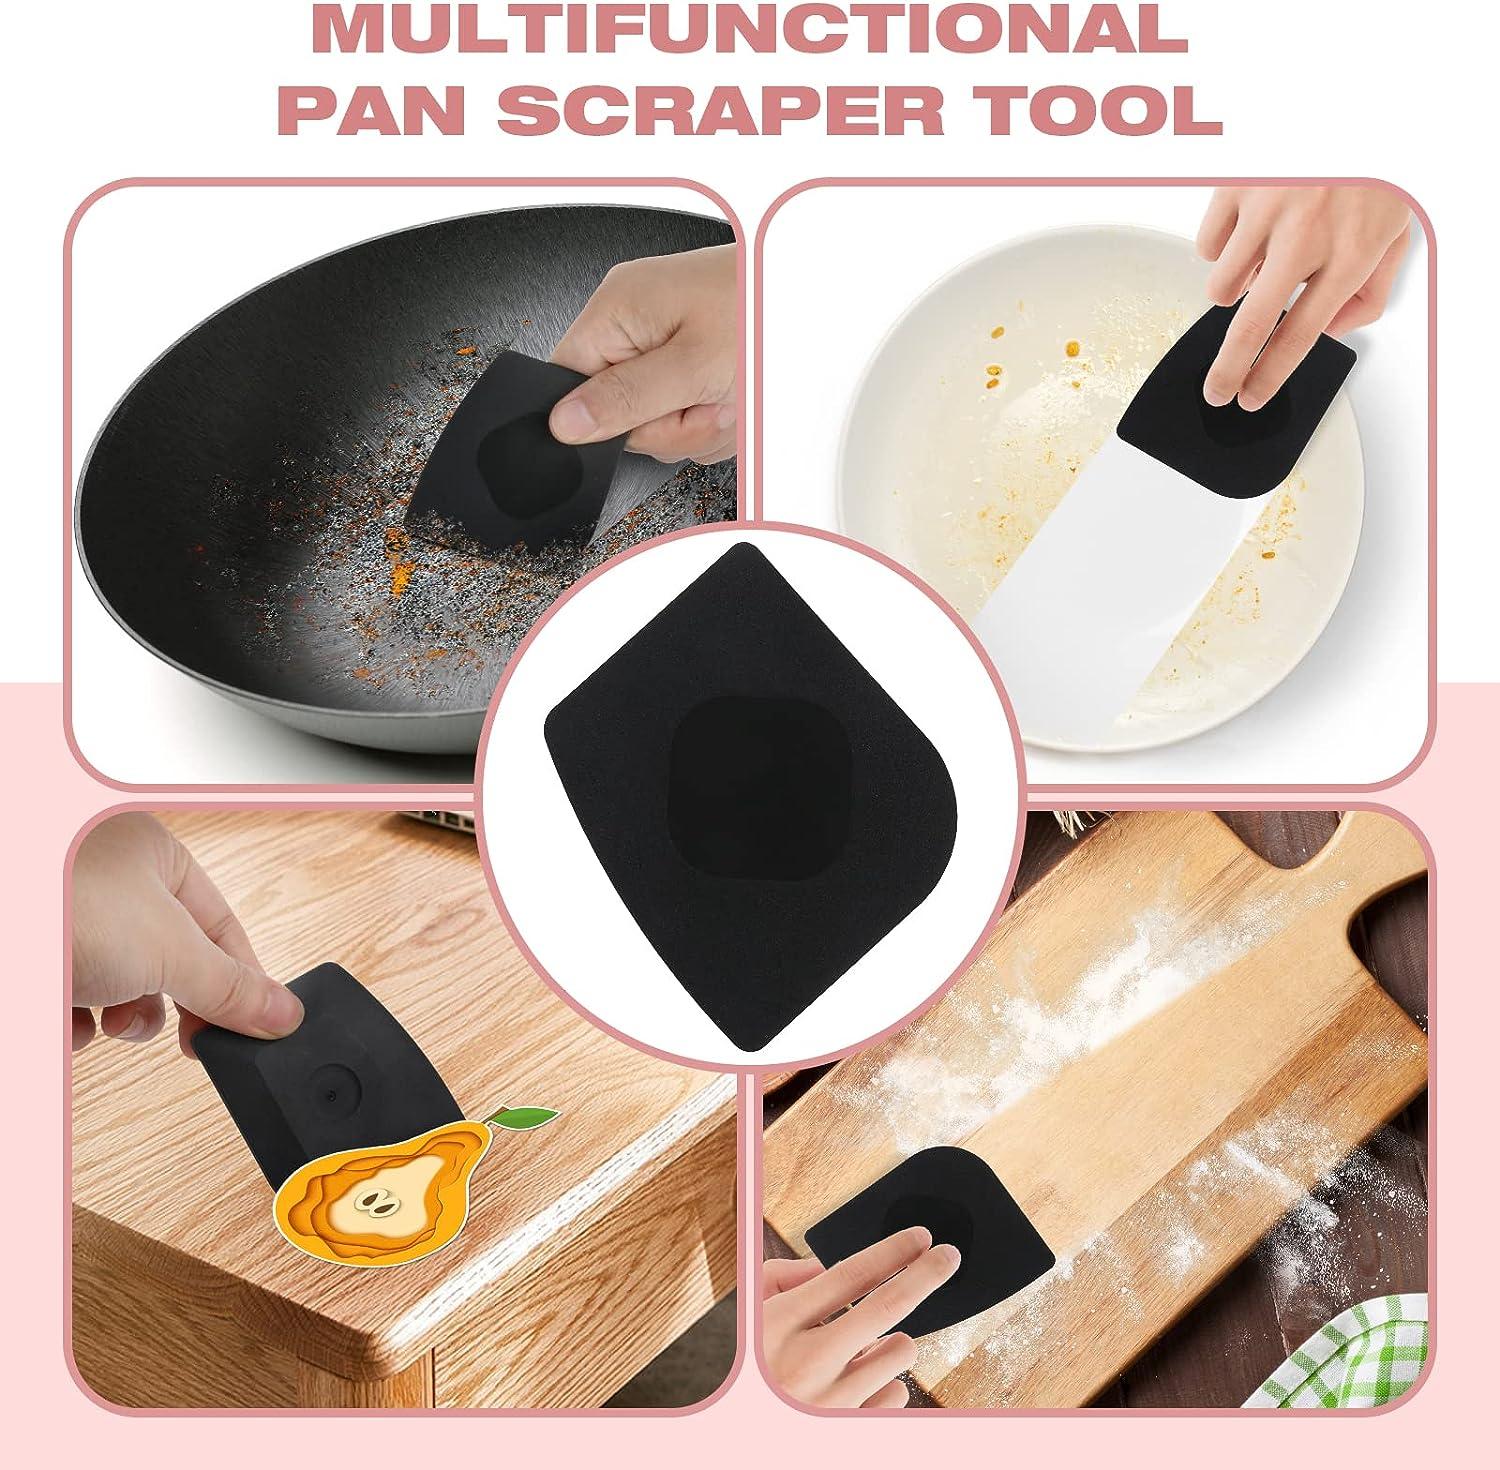 TMEDW Pan Scraper, 5 Pcs Pot Scraper, Pan Scraper Plastic, Multifunctional Scraper Tool for Kitchen, Non-Slip, Food Safe, High Heat Resistant